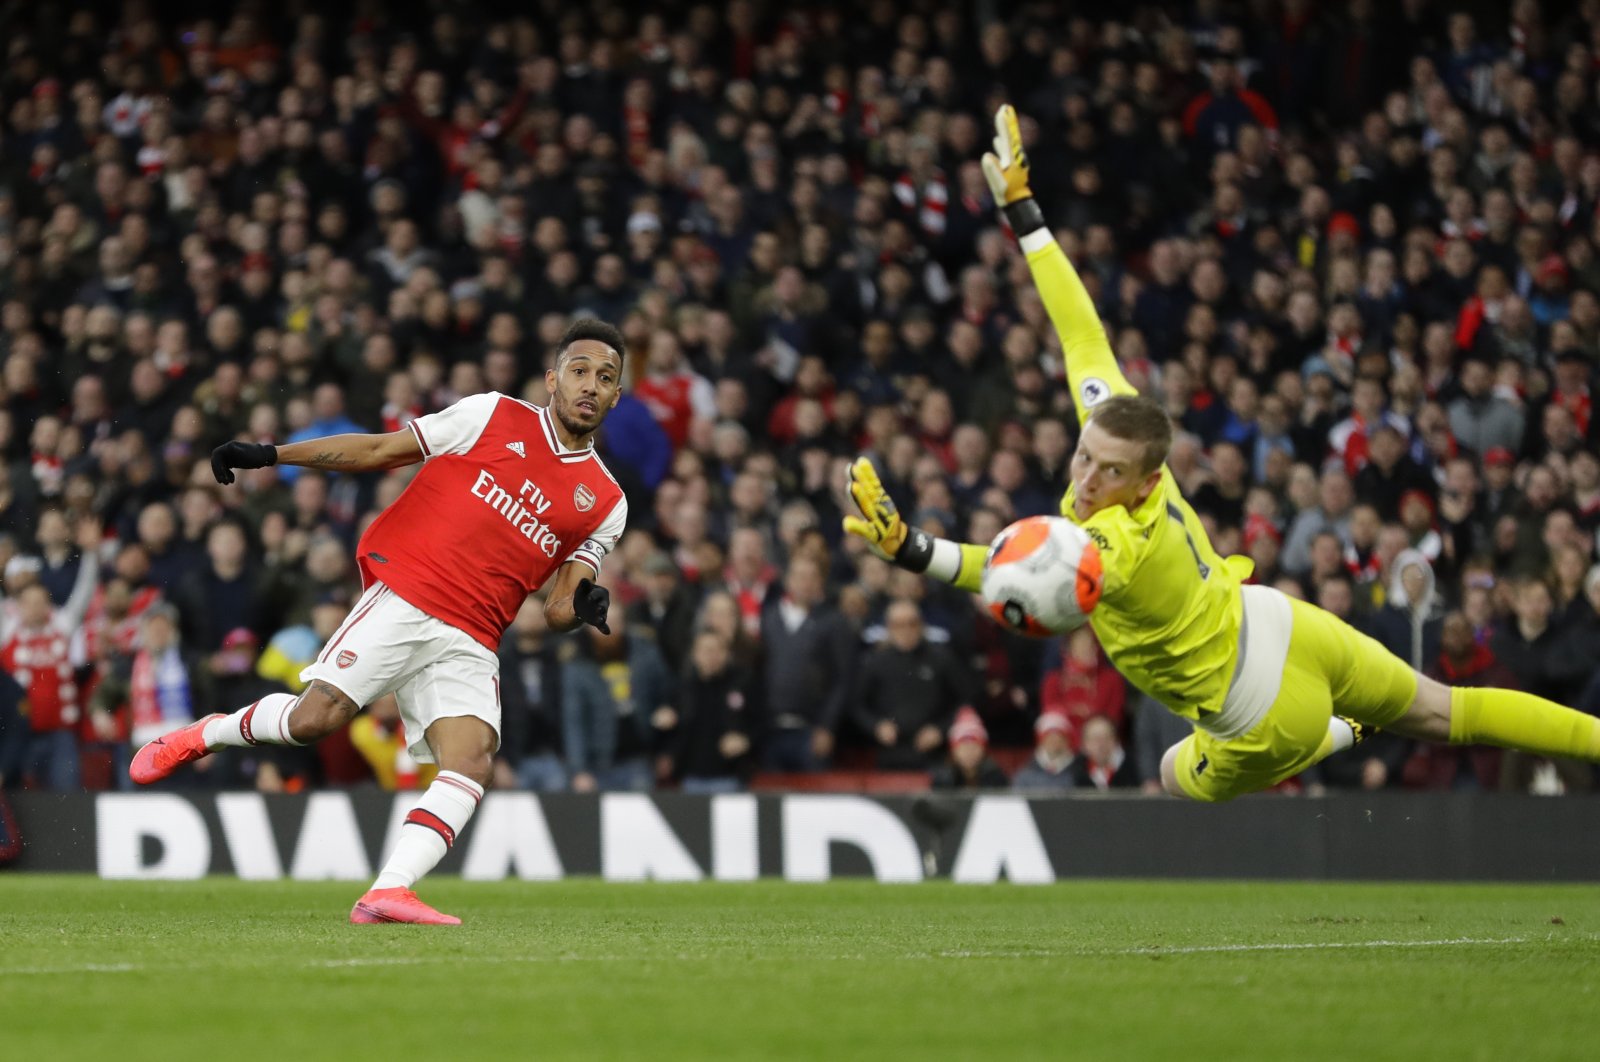 Arsenal's Pierre-Emerick Aubameyang scores a a goal during a Premier League against Everton in London, Feb. 23, 2020. (AP Photo)